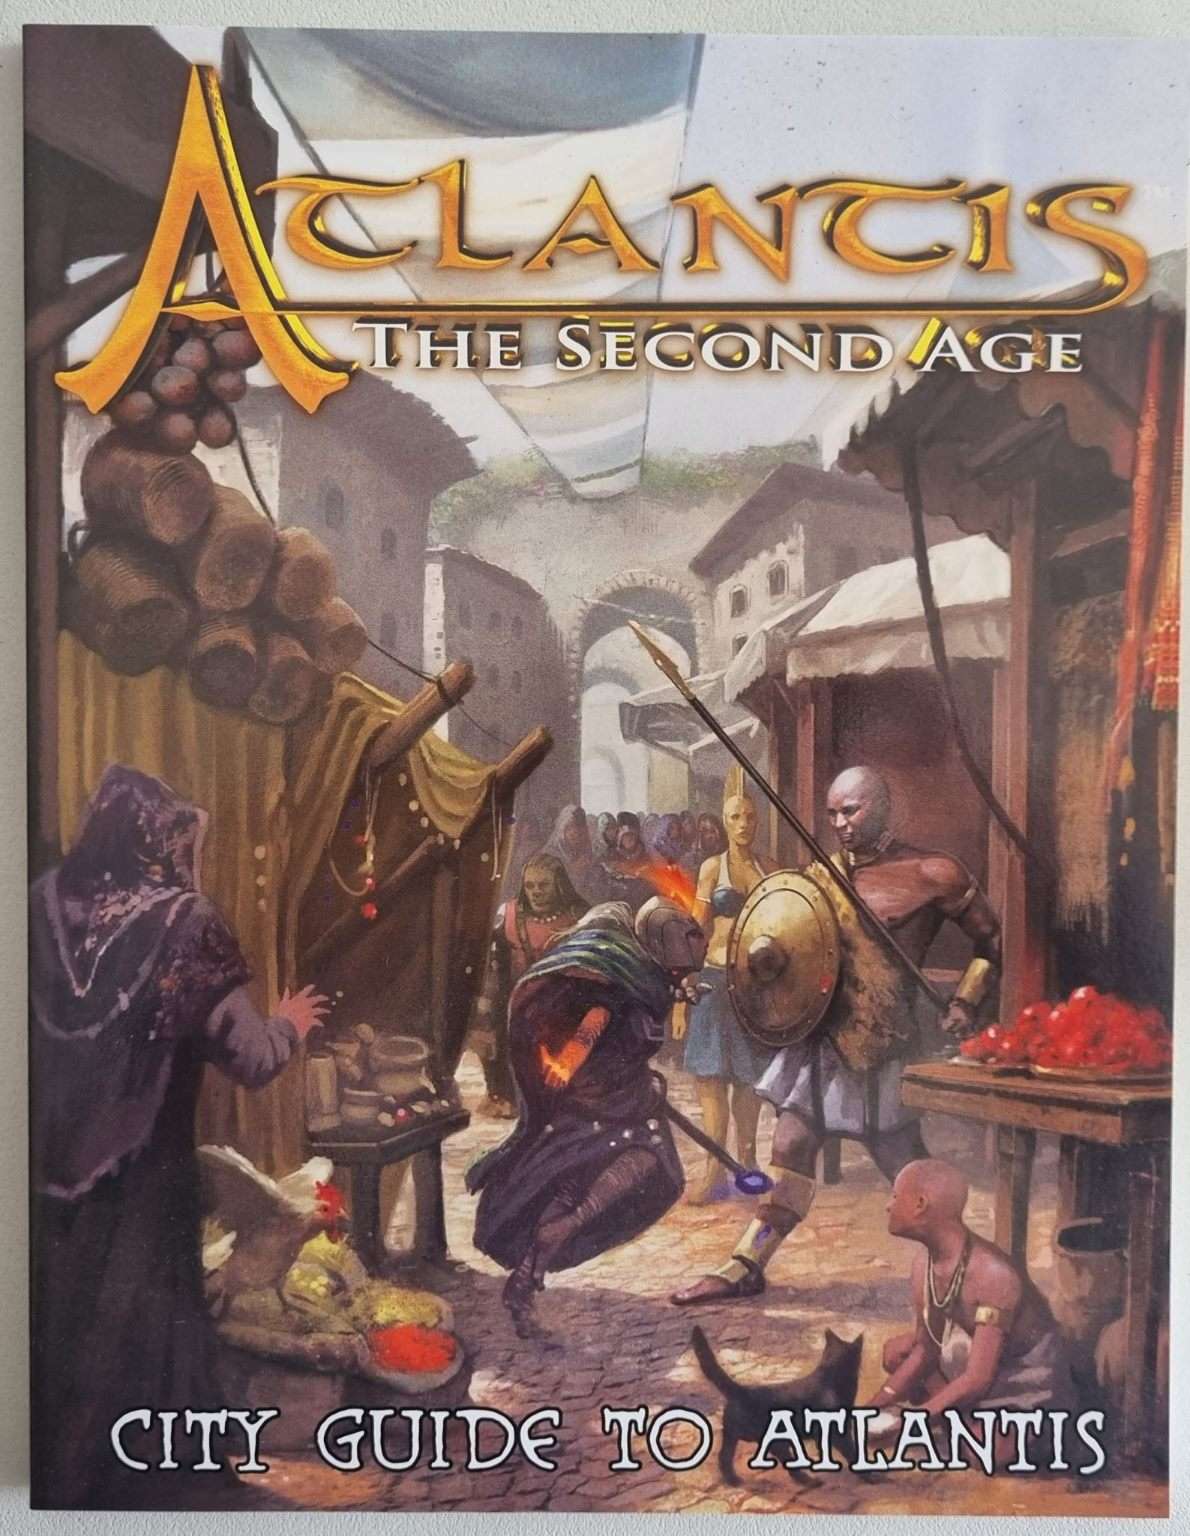 Atlantis The Second Age: City Guide to Atlantis